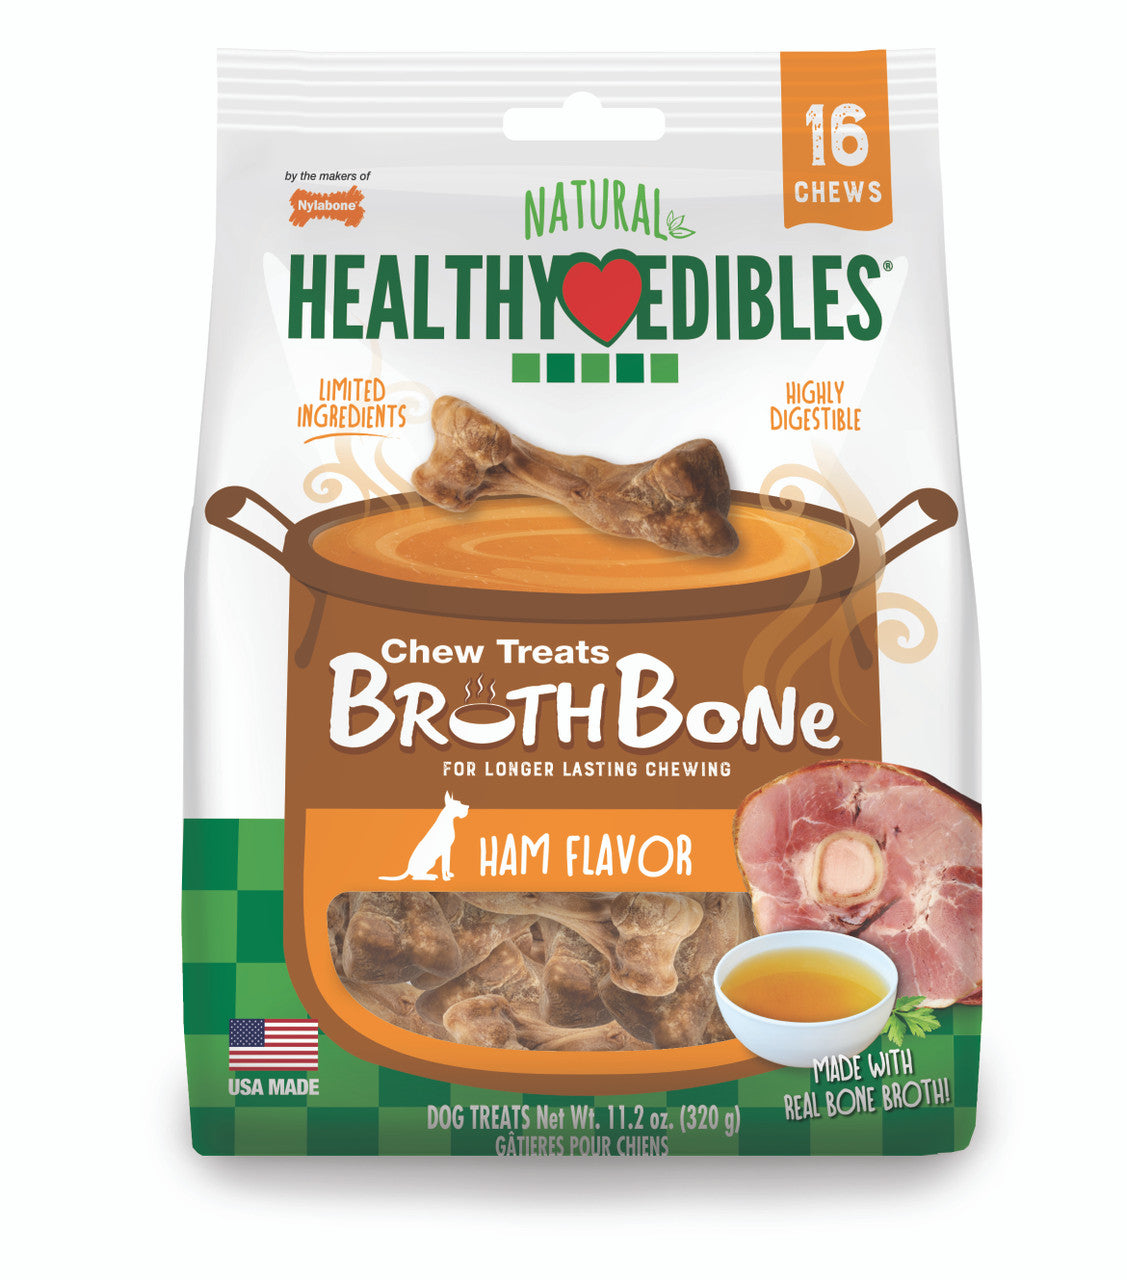 Nylabone Healthy Edibles Broth Bone All Natural Dog Treats Made With Real Bone Broth 16 count Regular - Up to 25 Ibs.